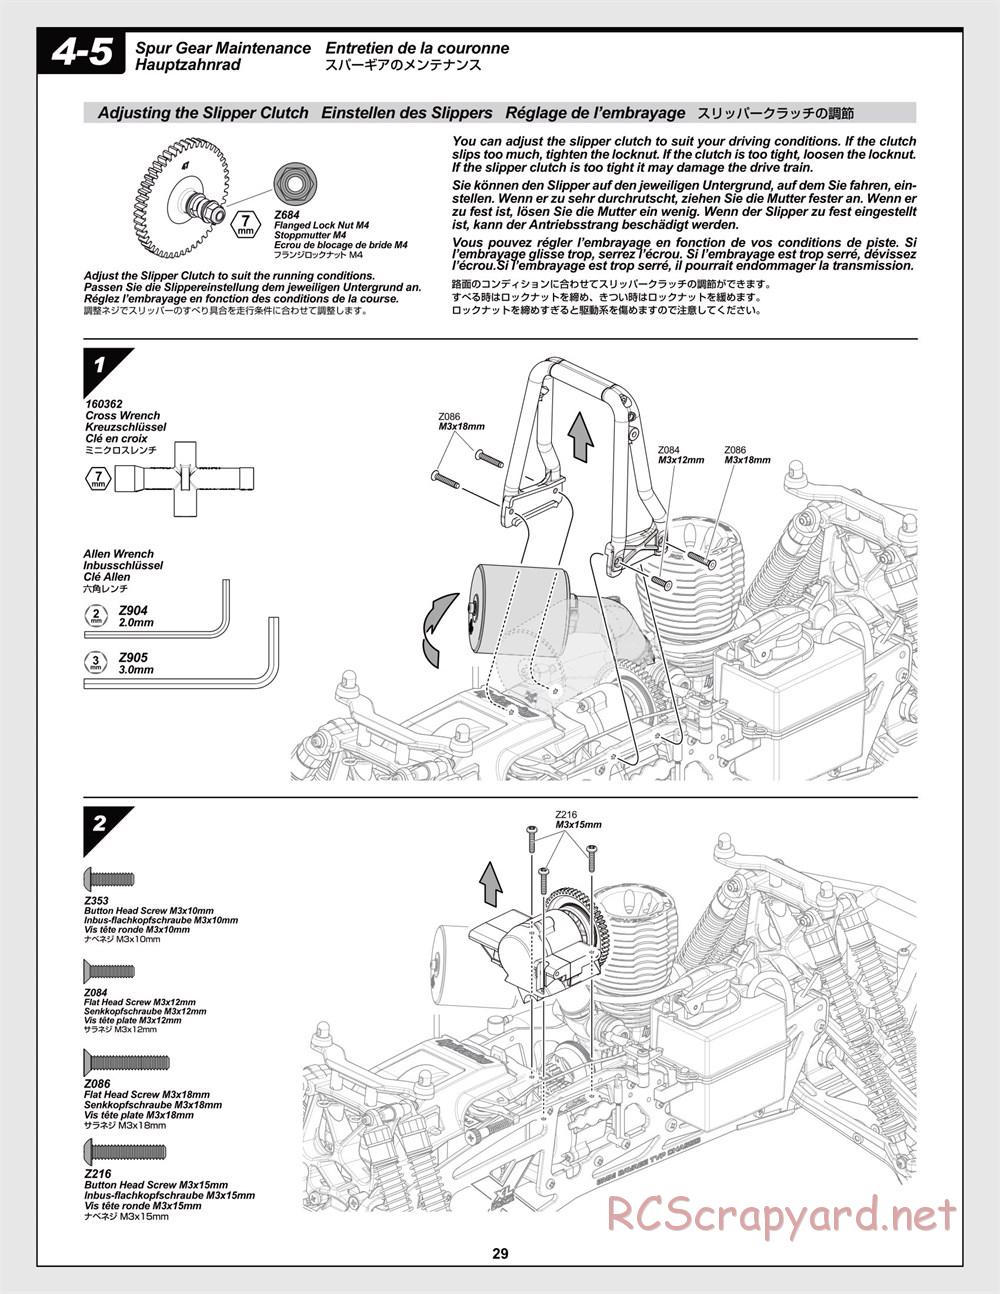 HPI - Savage XL 5.9 - Manual - Page 29